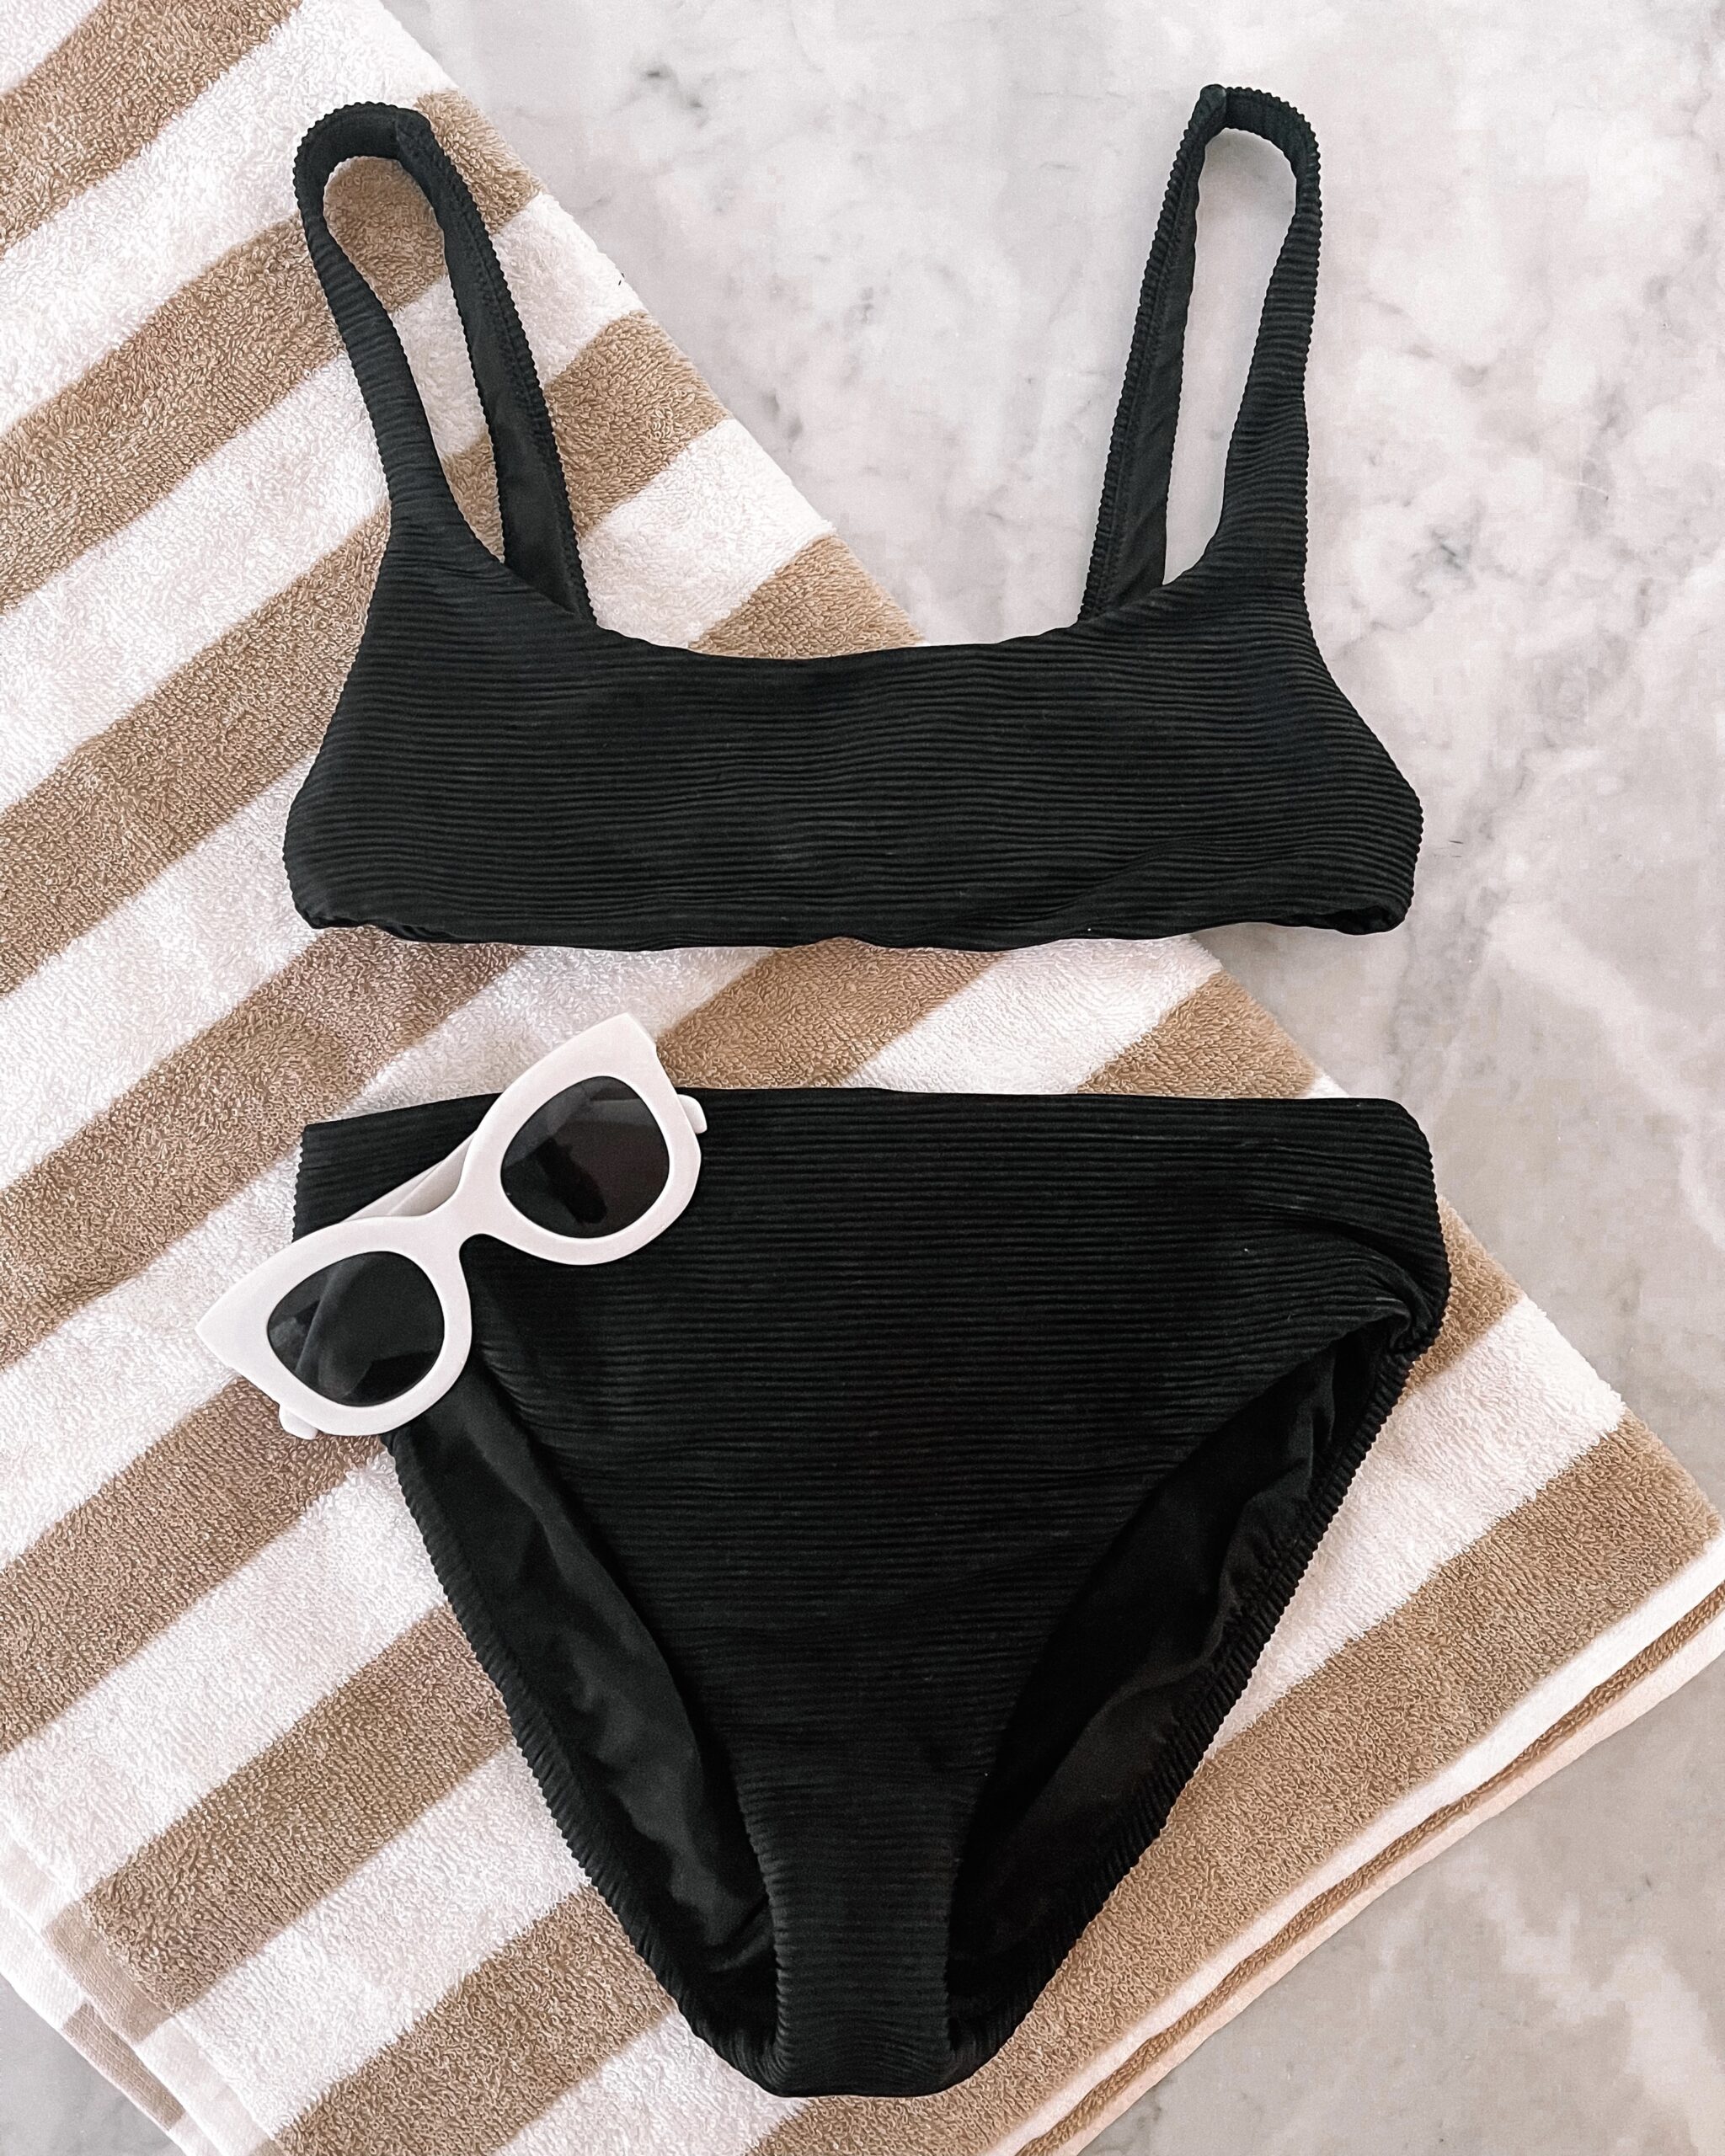 Black Jcrew Swimsuit Amazon Fashion White Sunglasses Tan and White Stripe Towel